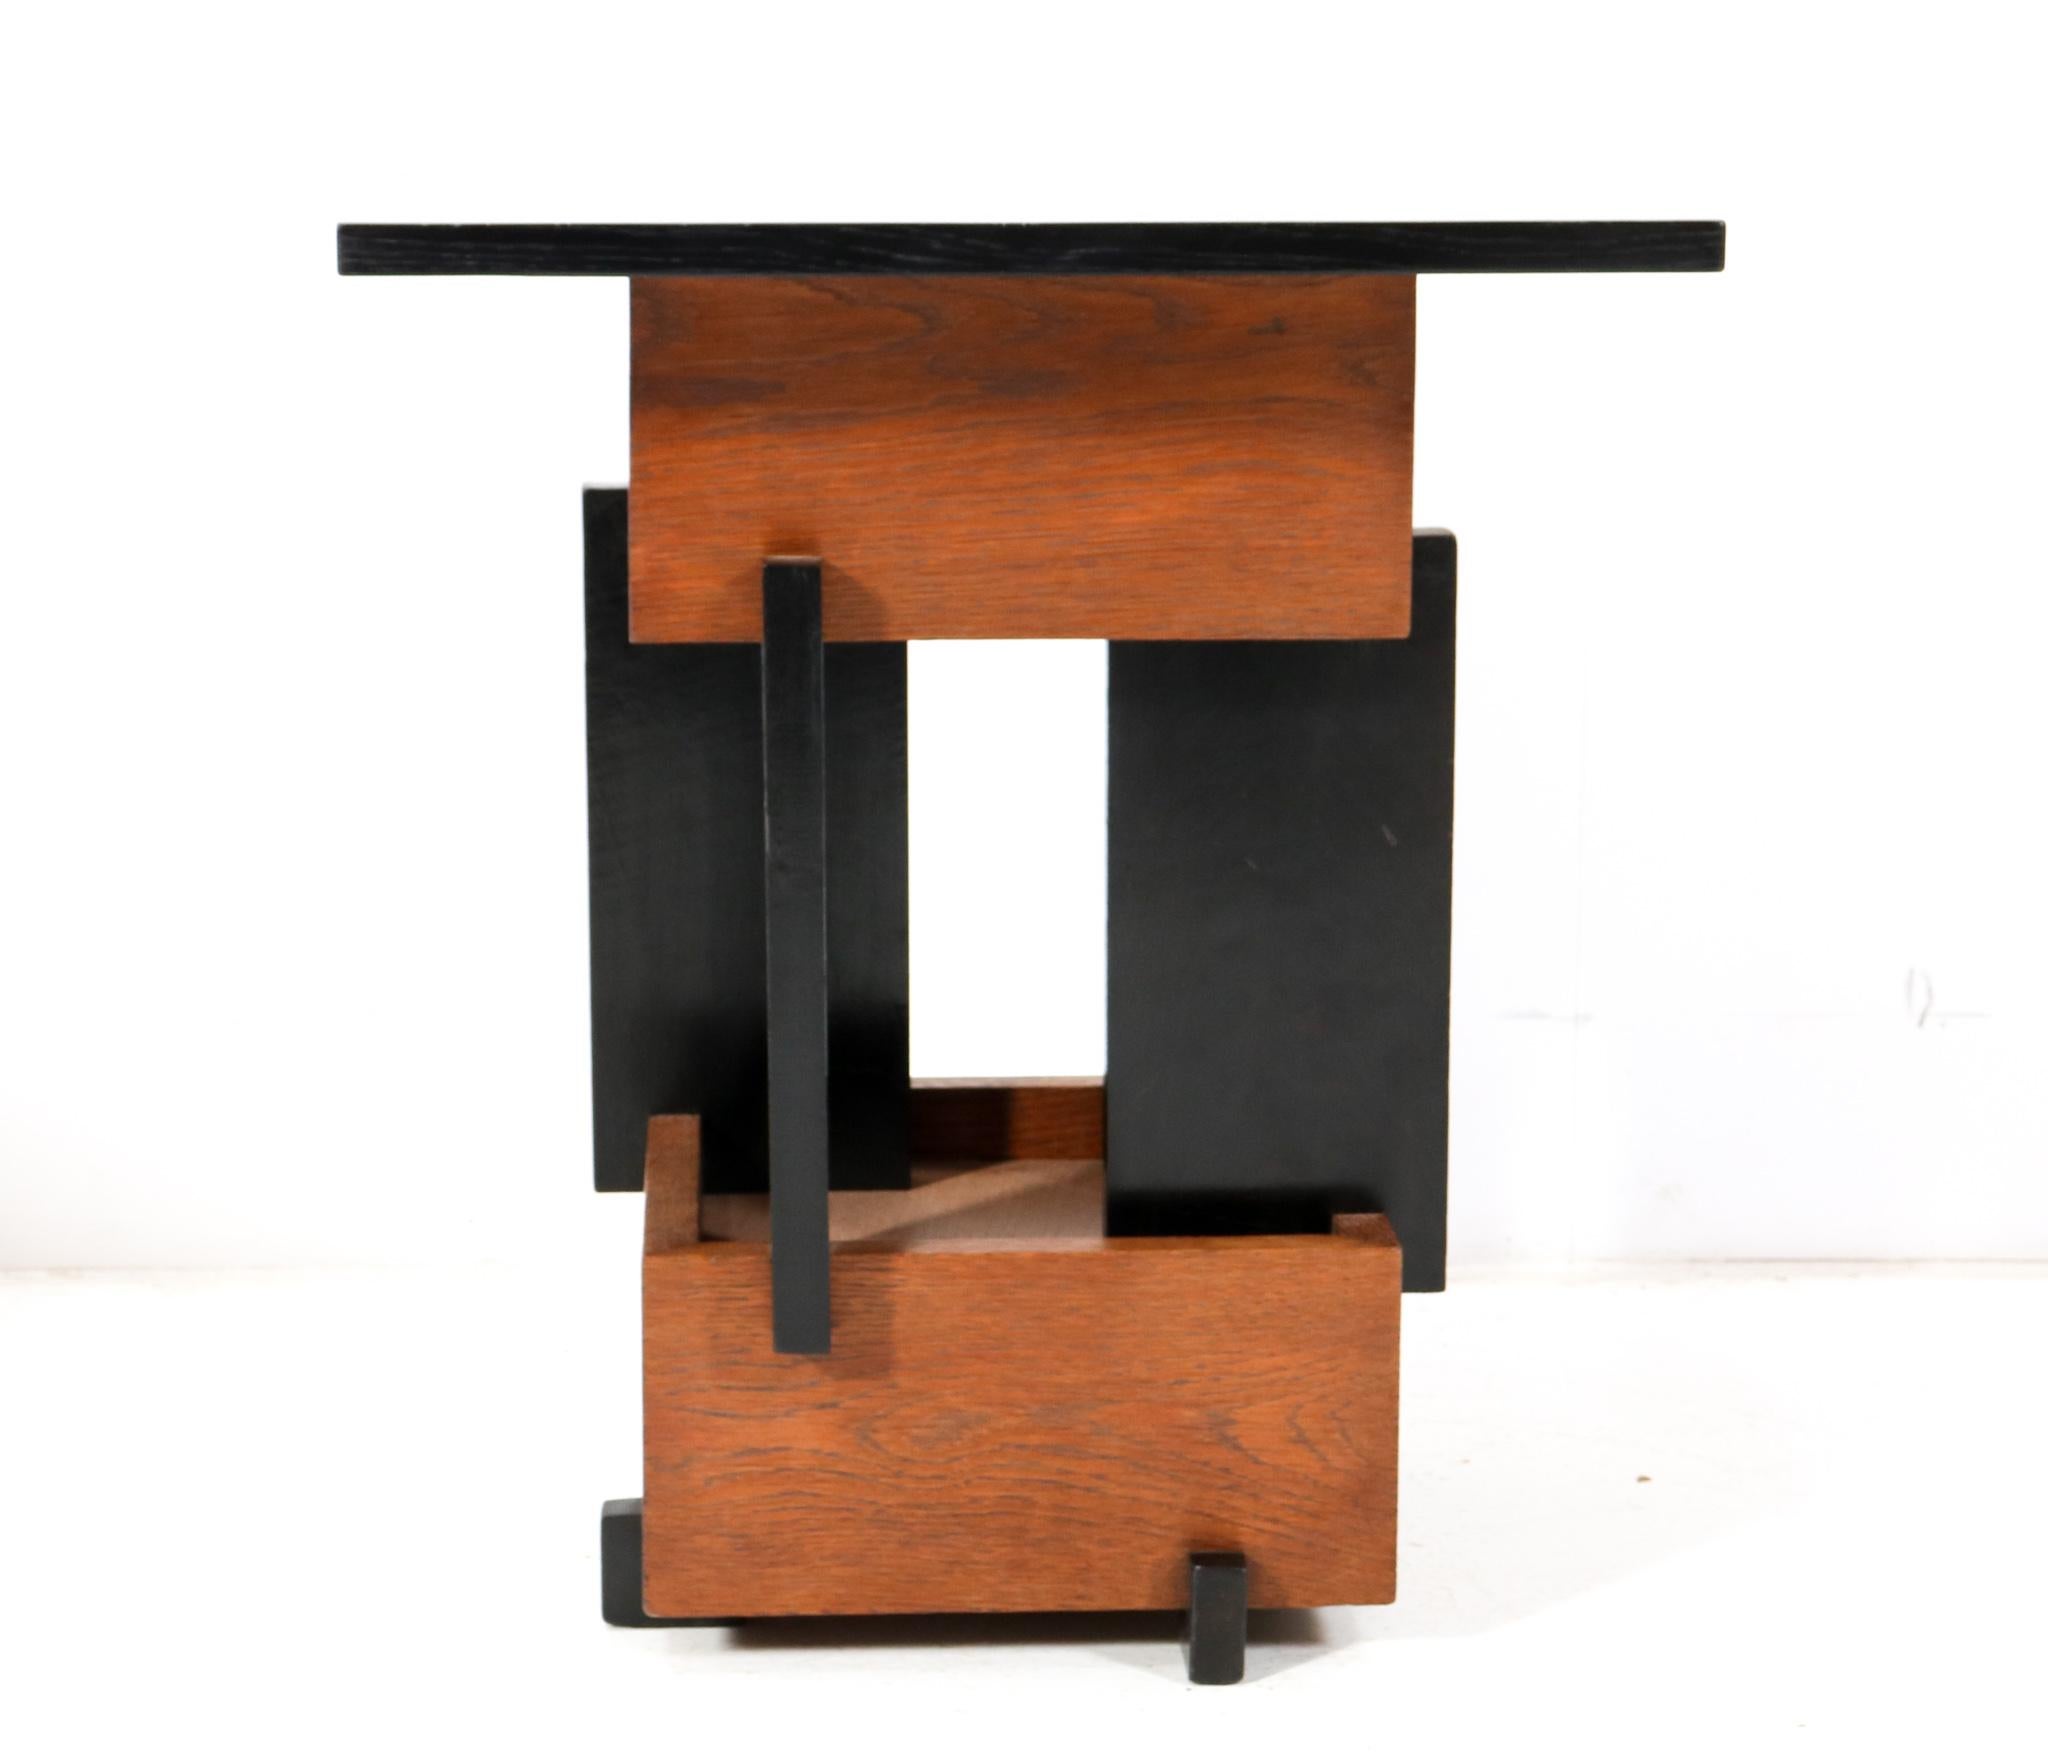 Oak Art Deco Modernist Side Table by Cor Alons, 1930s For Sale 4